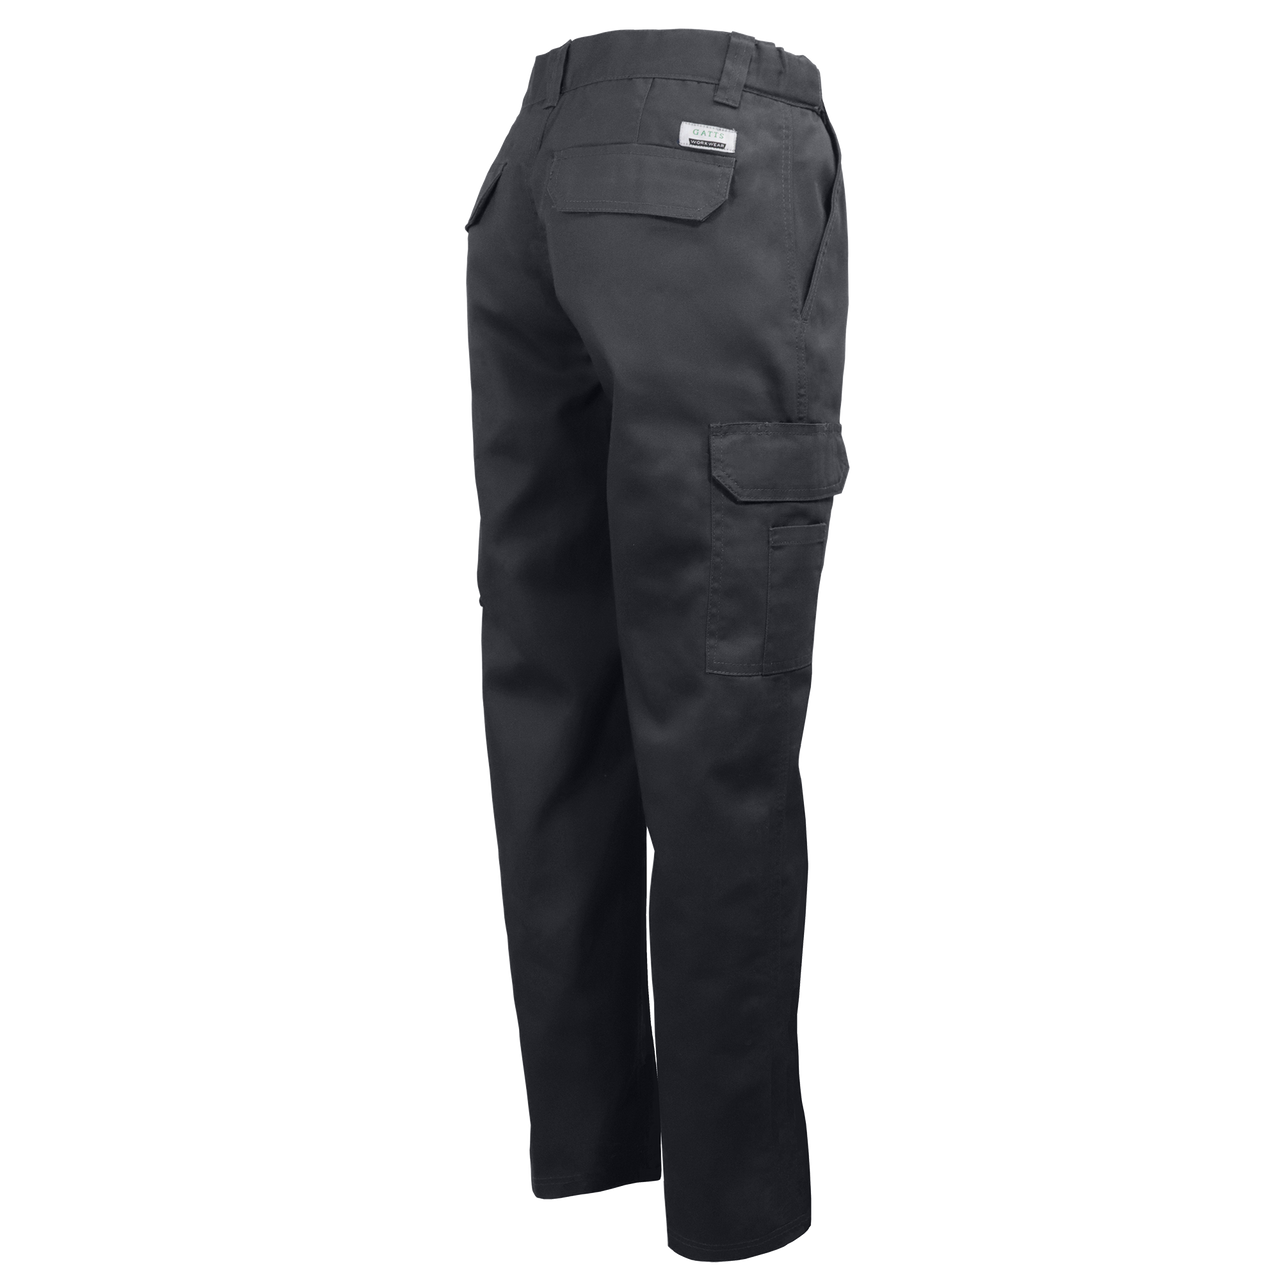 MRB-011 Pantalon cargo (taille flexible)||MRB-011 Cargo pant (flexible waist)